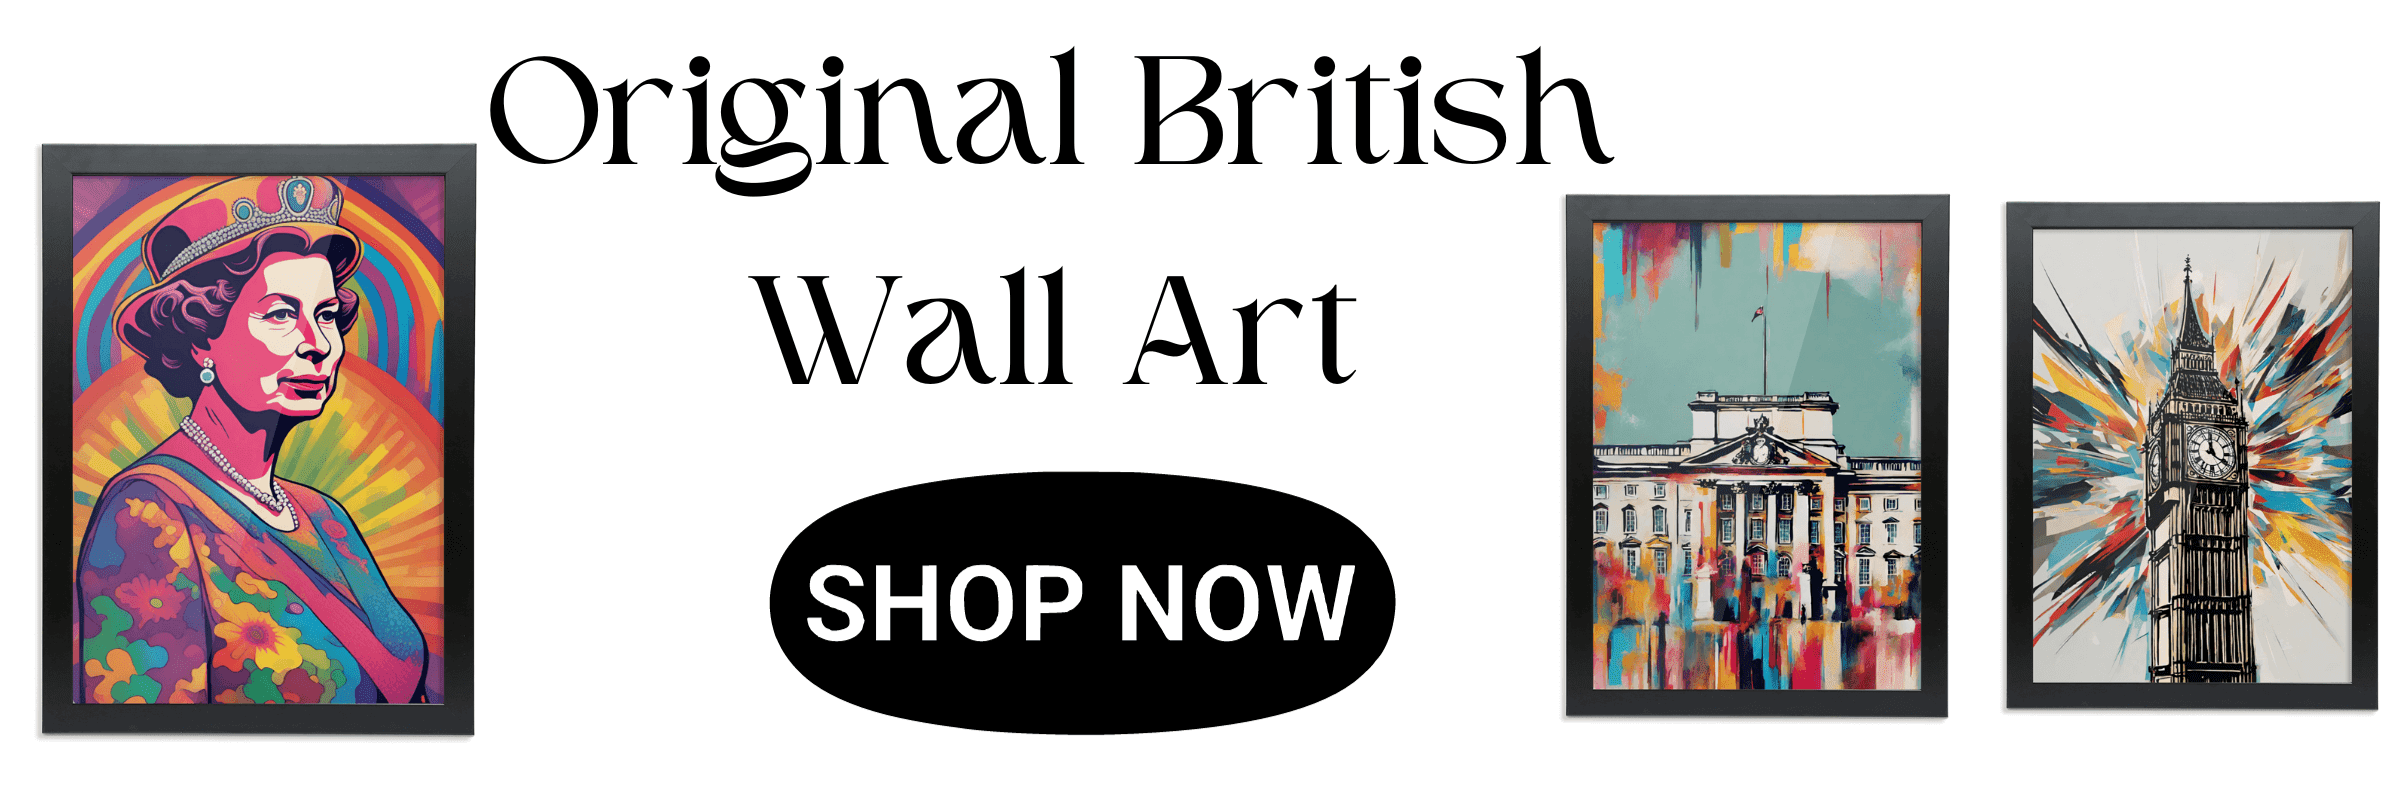 Original British Wall Art (1)